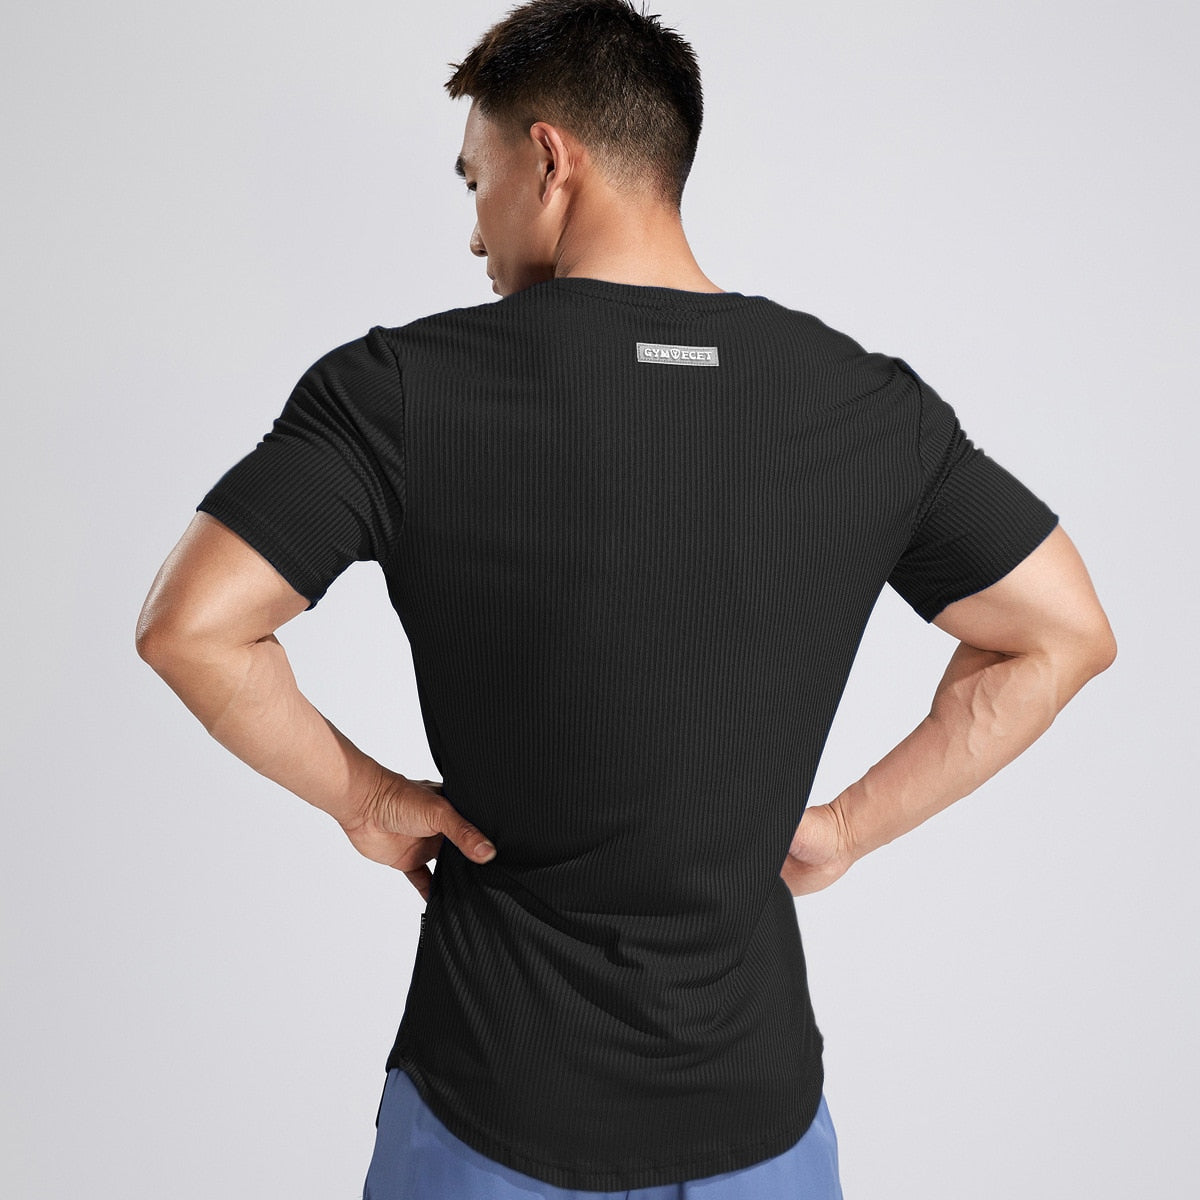 Summer Casual Short Sleeve T-shirt Men Gym Fitness Training Shirt Male Bodybuilding Skinny Tees Tops Running Sport Clothing